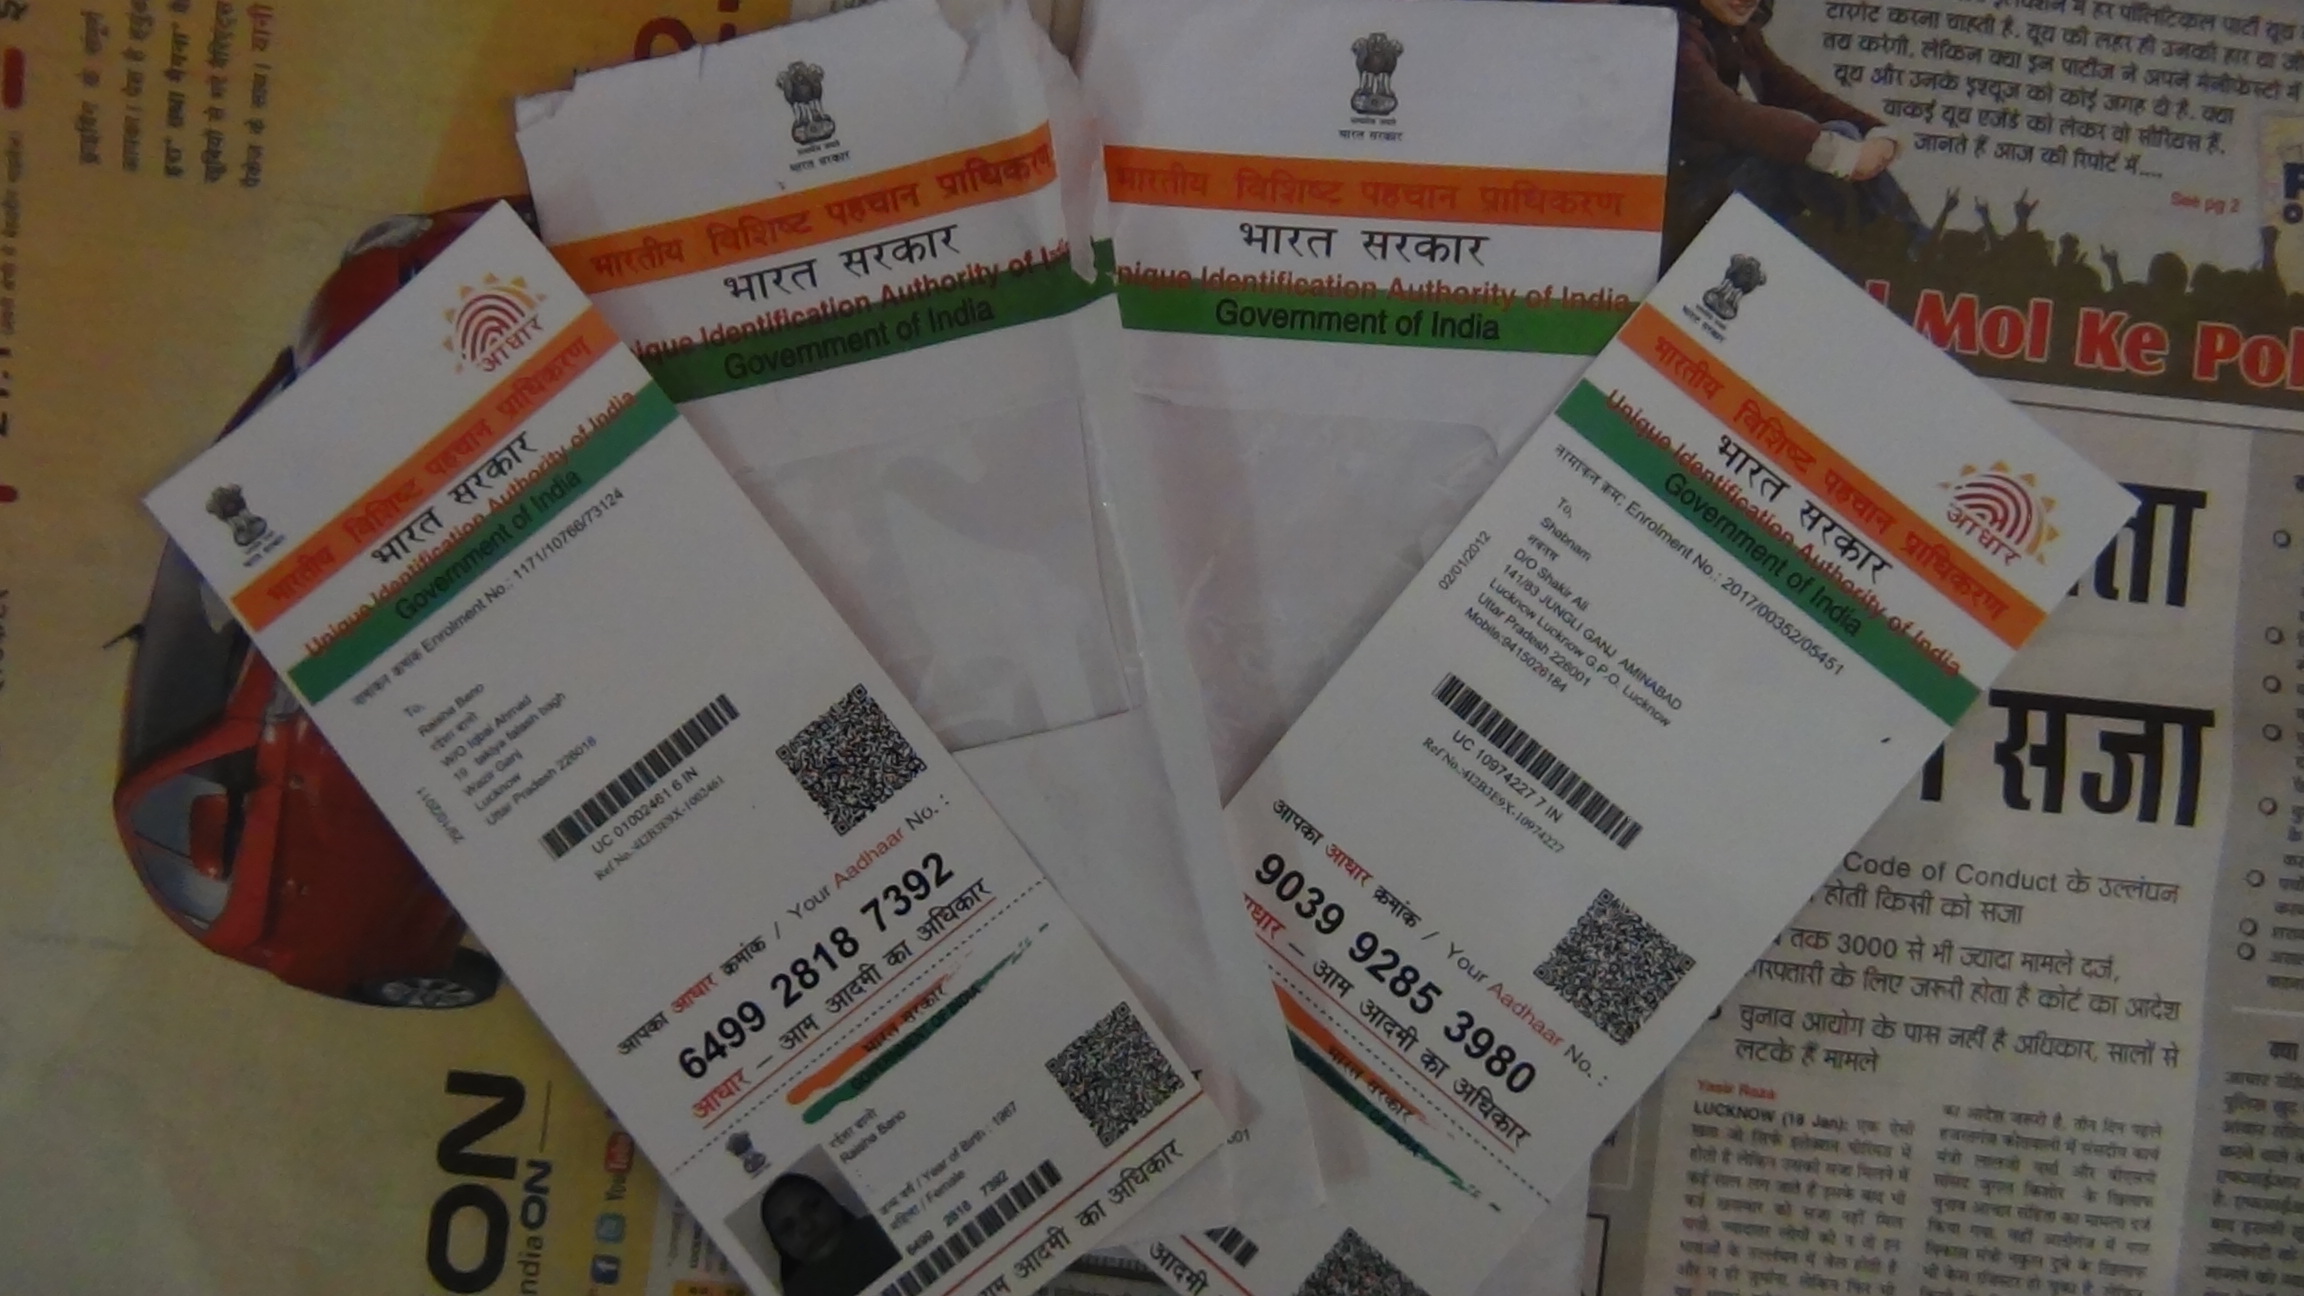 Aadhar Card ,aadhar mobile verification,Aadhar Card Linked Mobile Number,Aadhar Card update,Supreme Court asks Link Mobile Number,prime minister Narendra Modi,Narendra Modi,aadhaar mobile,political news